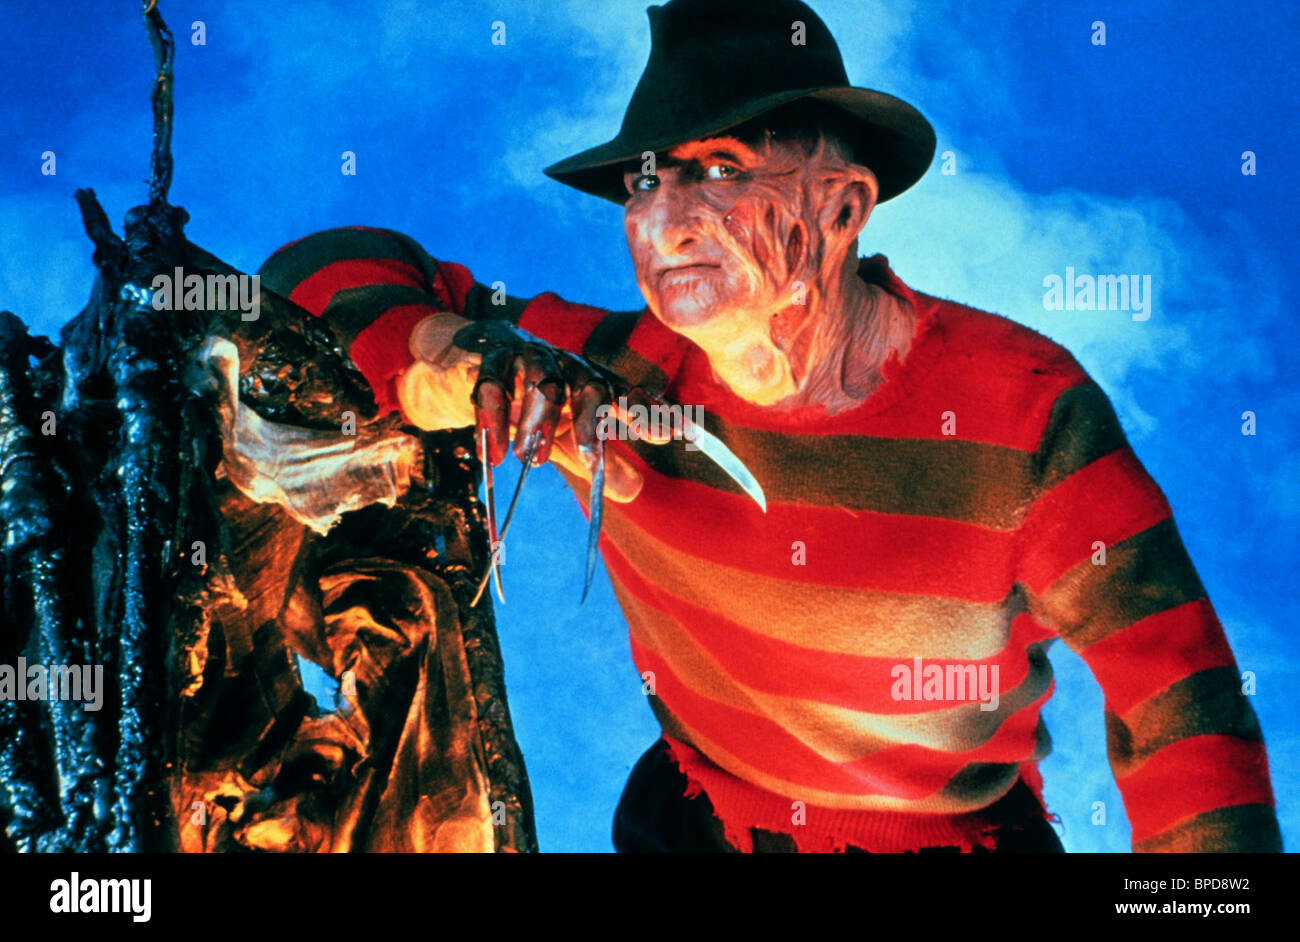 1989 A Nightmare On Elm Street: The Dream Child